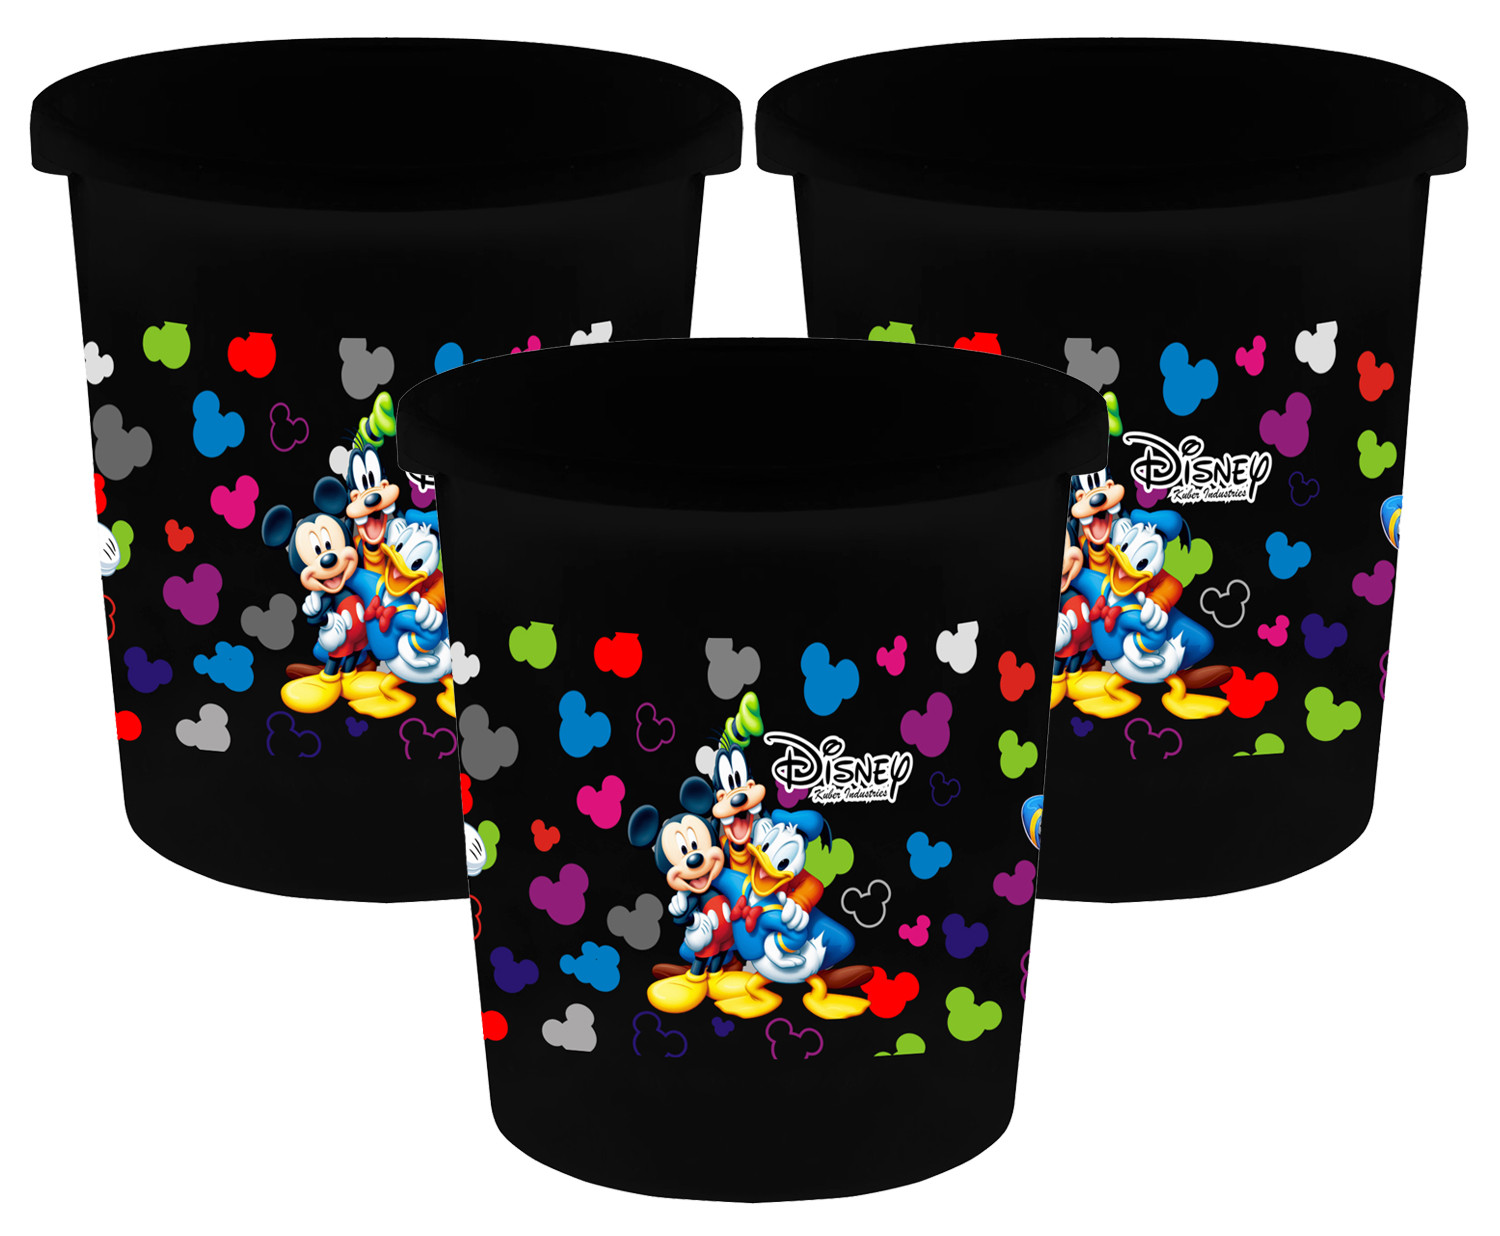 Kuber Industries Disney Team Mickey Print Plastic Garbage Waste Dustbin/Recycling Bin for Home, Office, Factory, 5 Liters (Black) -HS_35_KUBMART17333